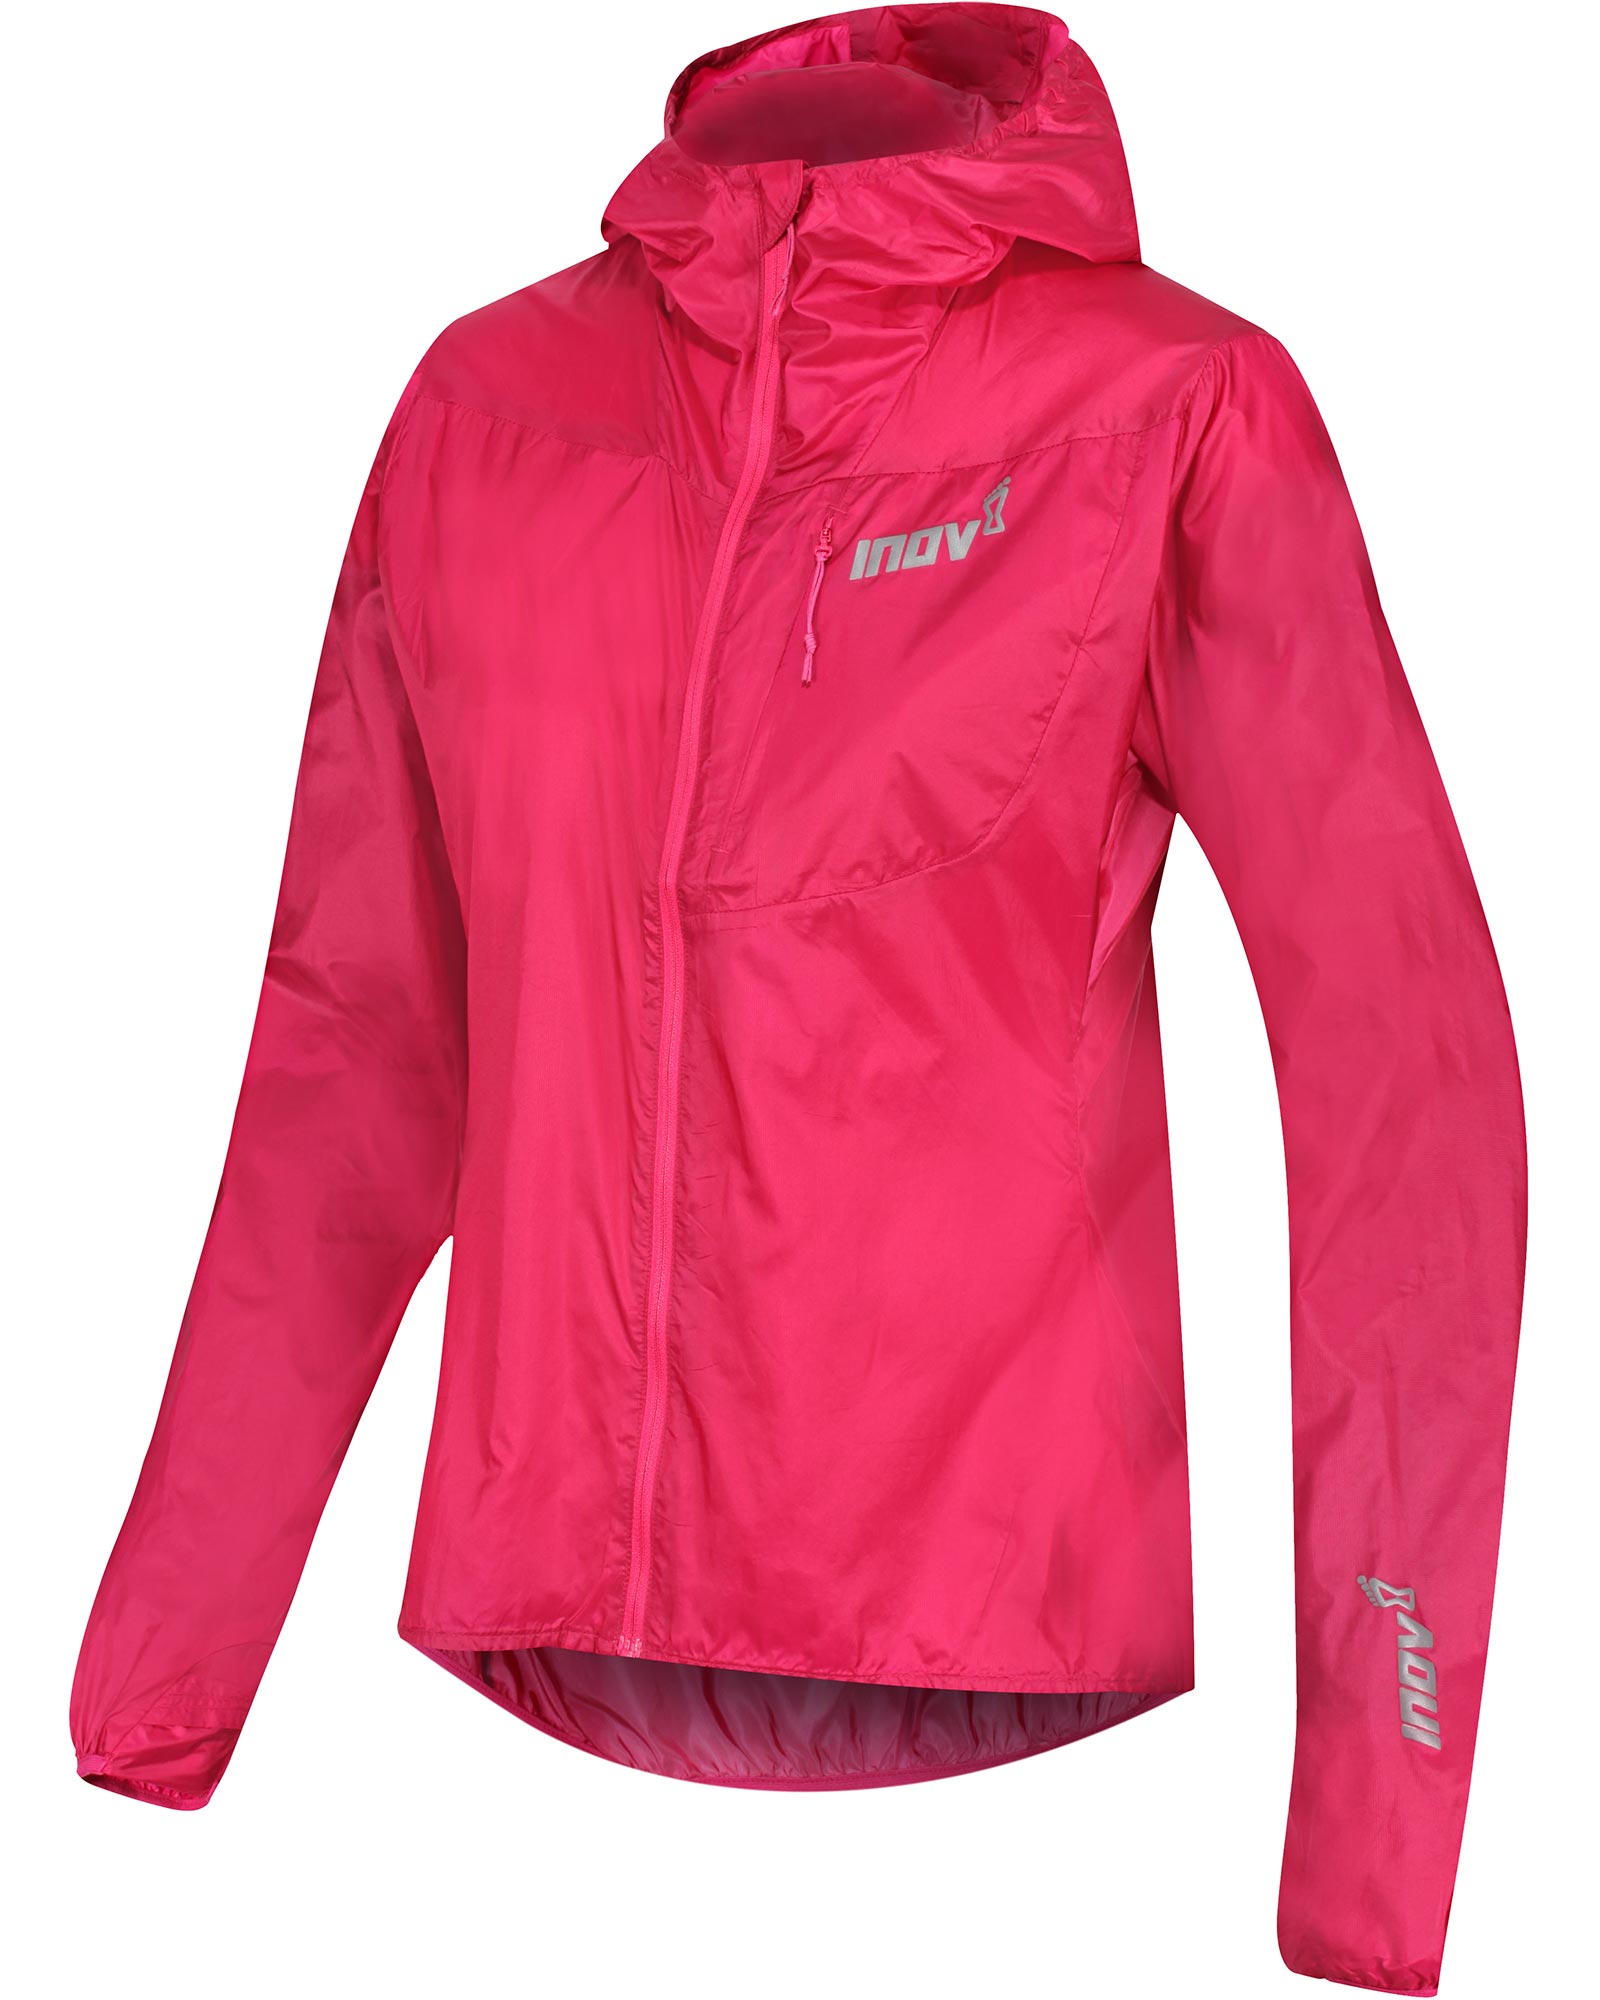 Inov 8 Full Zip Windshell Women’s Jacket - Pink 16